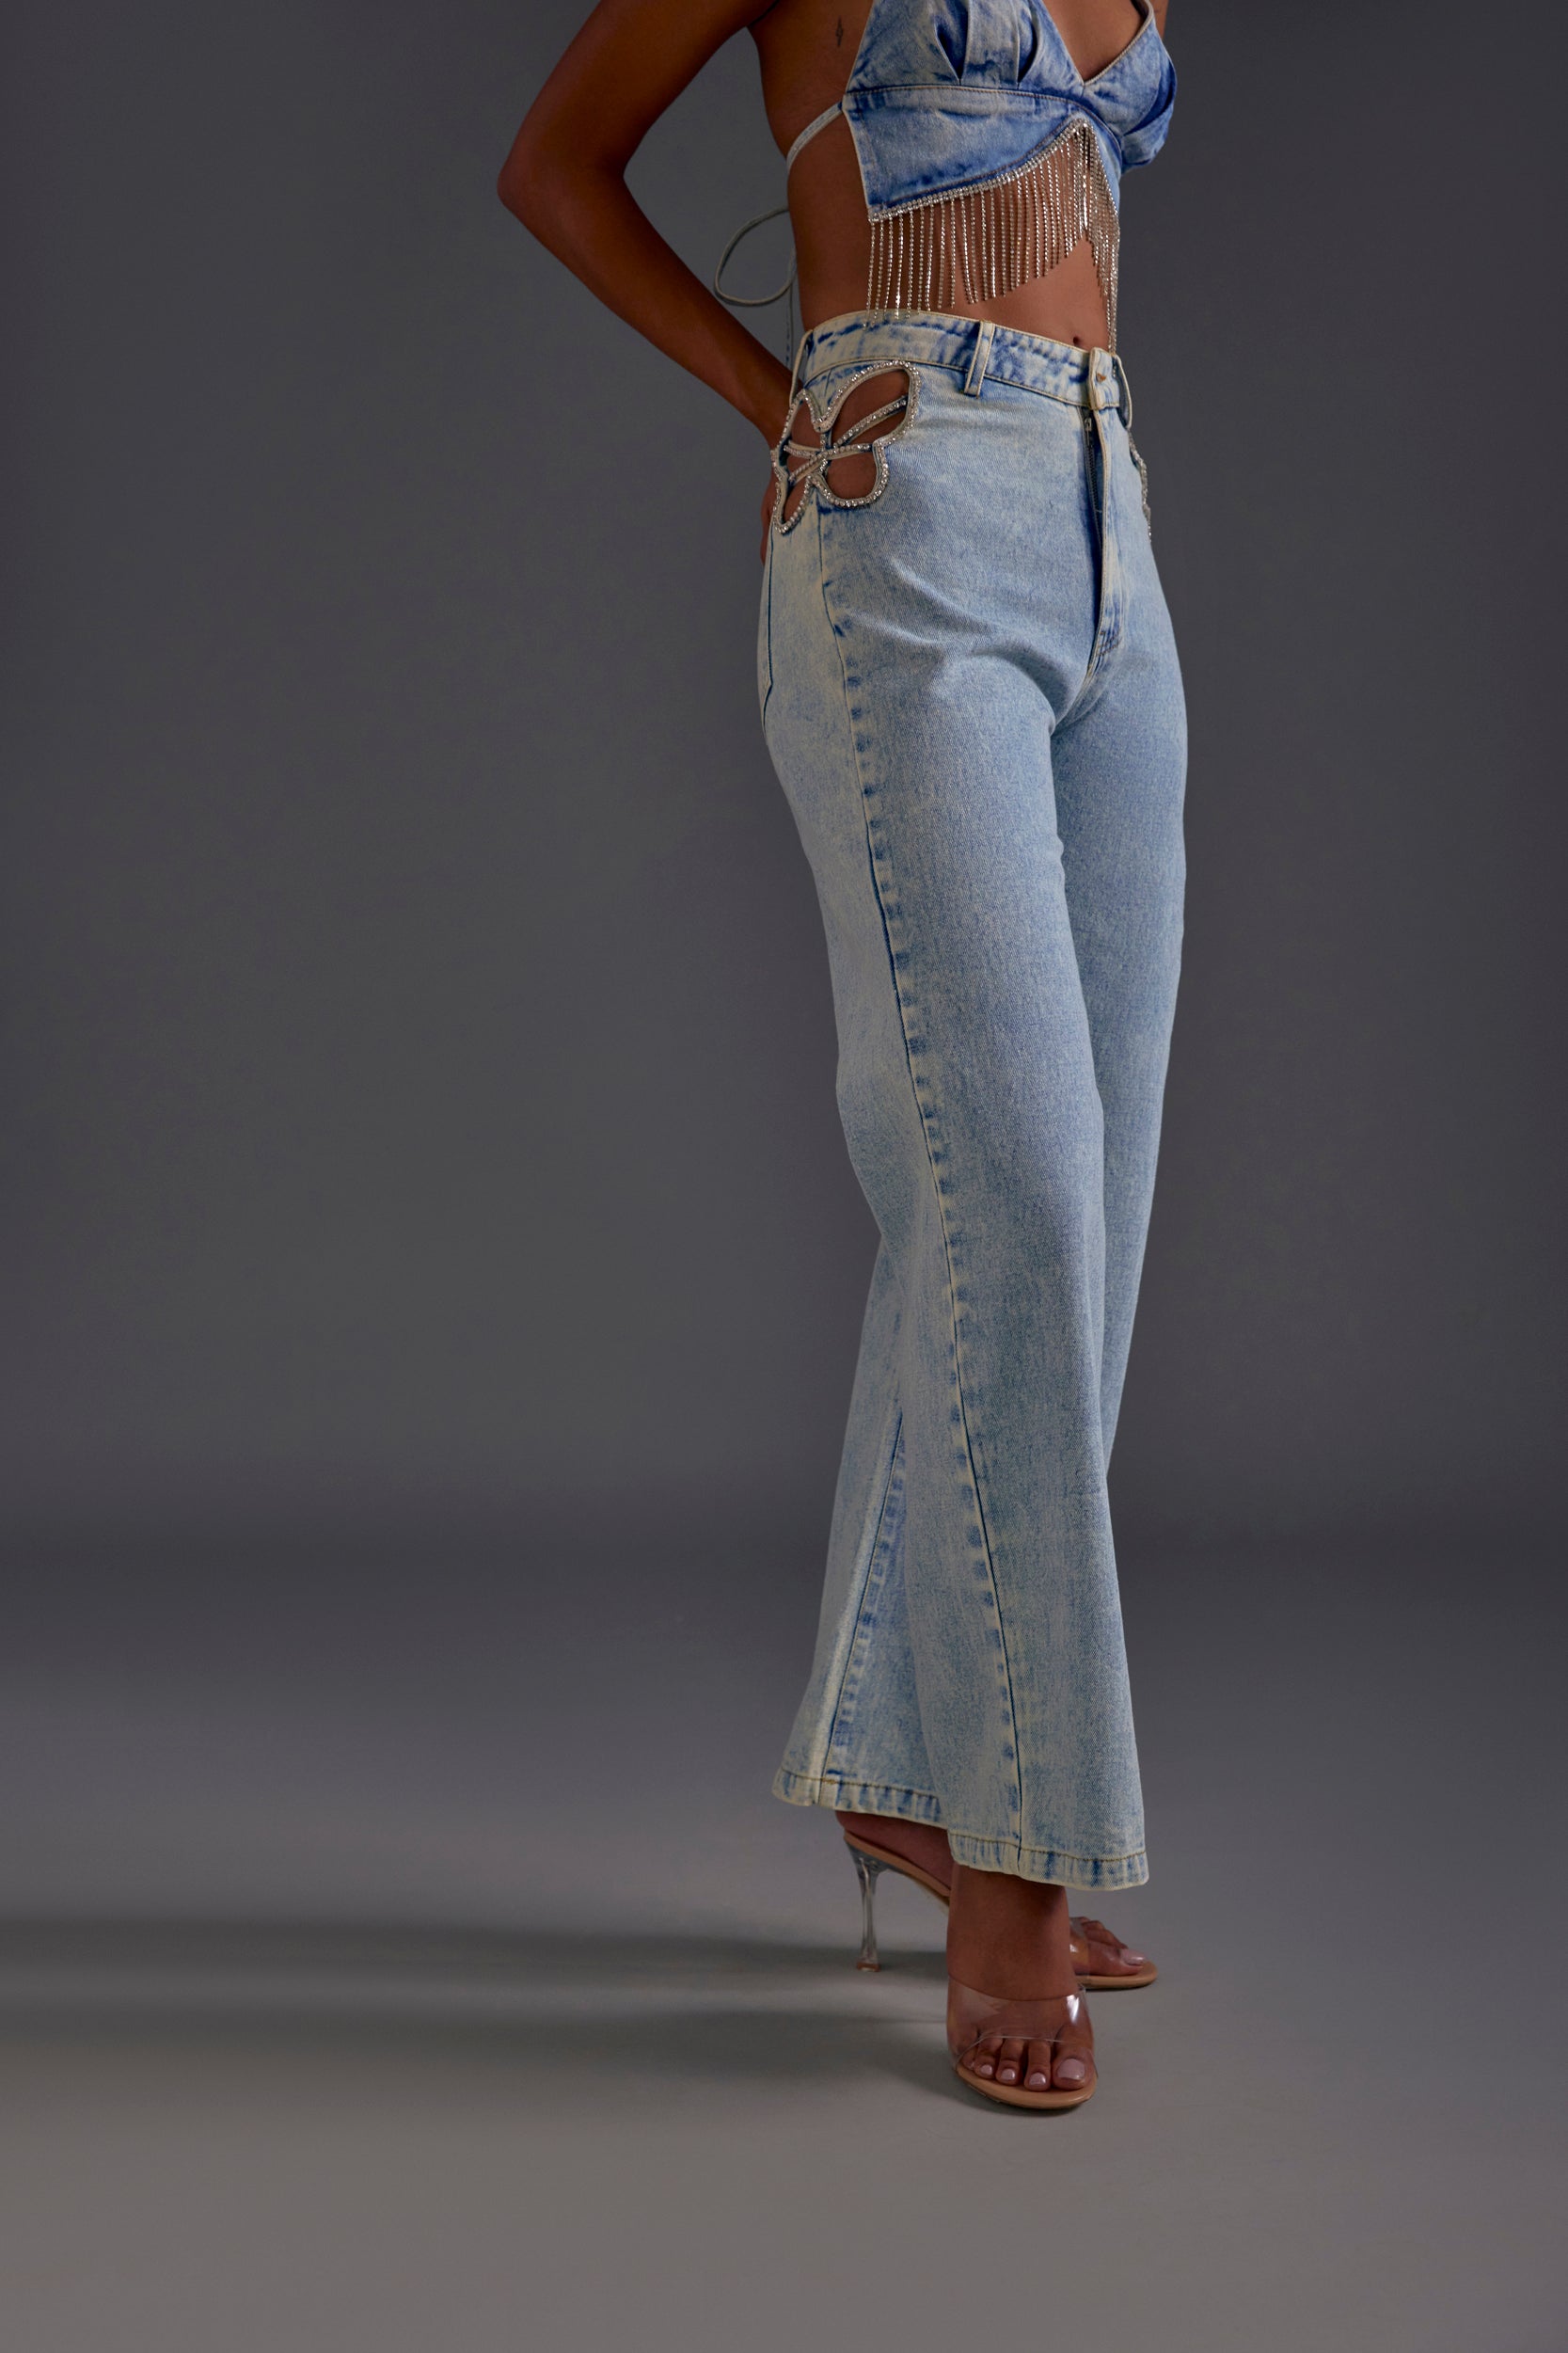 Rhinestone Embellished Cutout Jeans